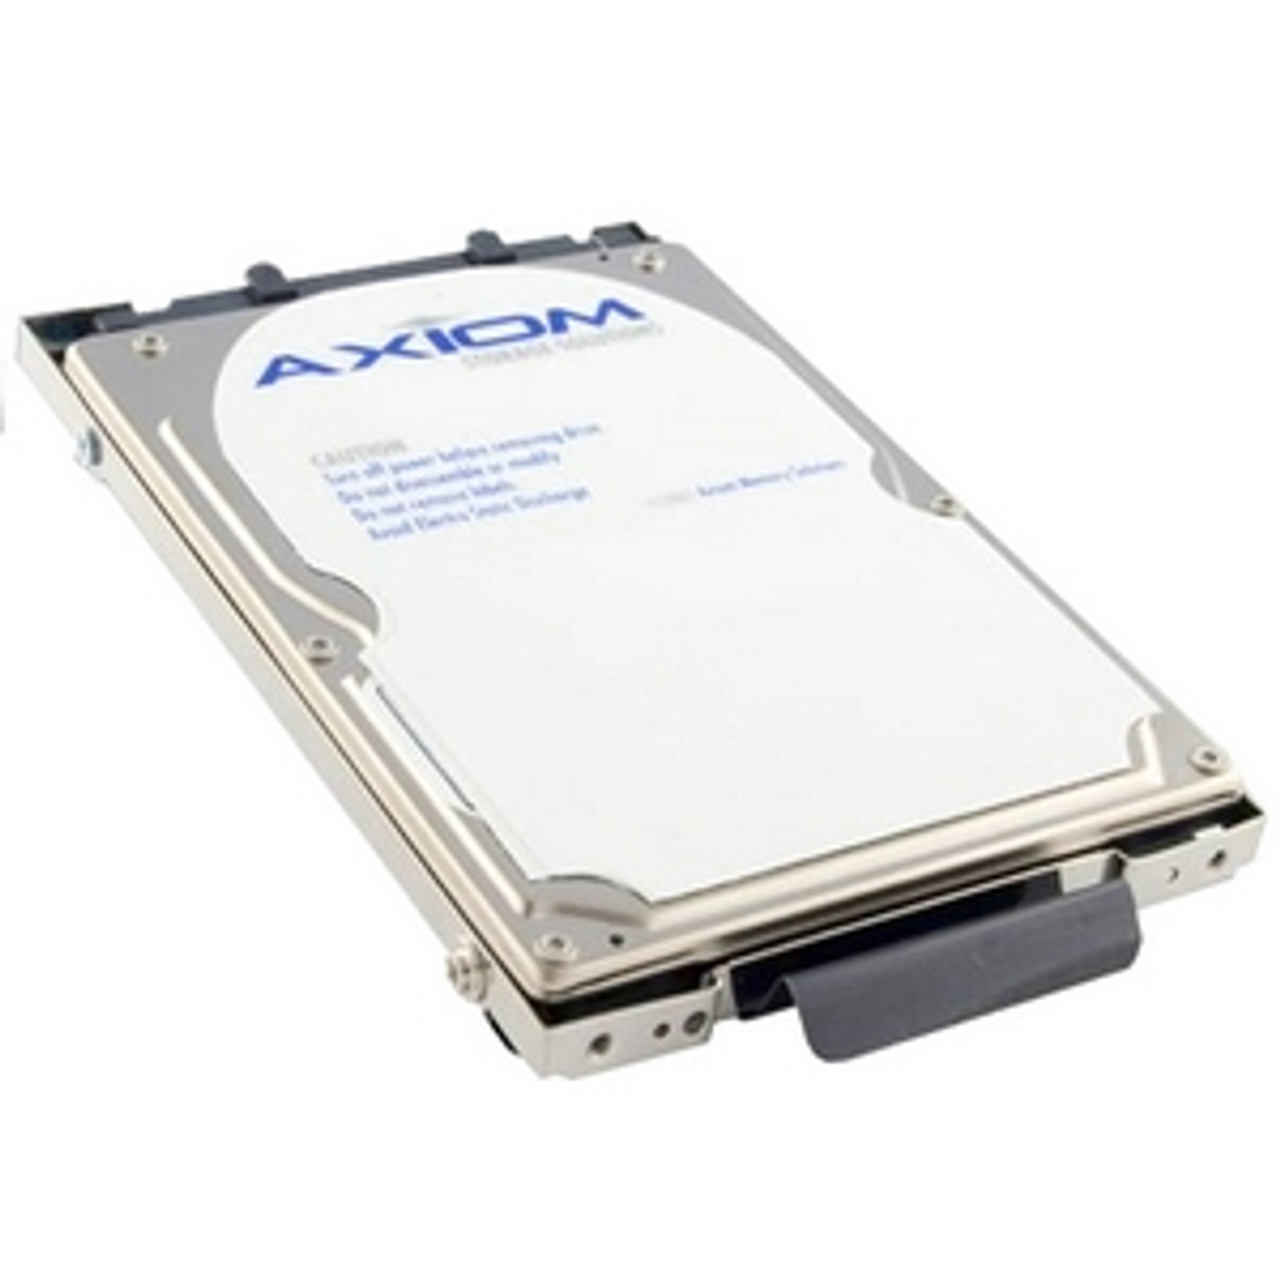 AXD-0480 - Axiom 80 GB 2.5 Plug-in Module Hard Drive - IDE